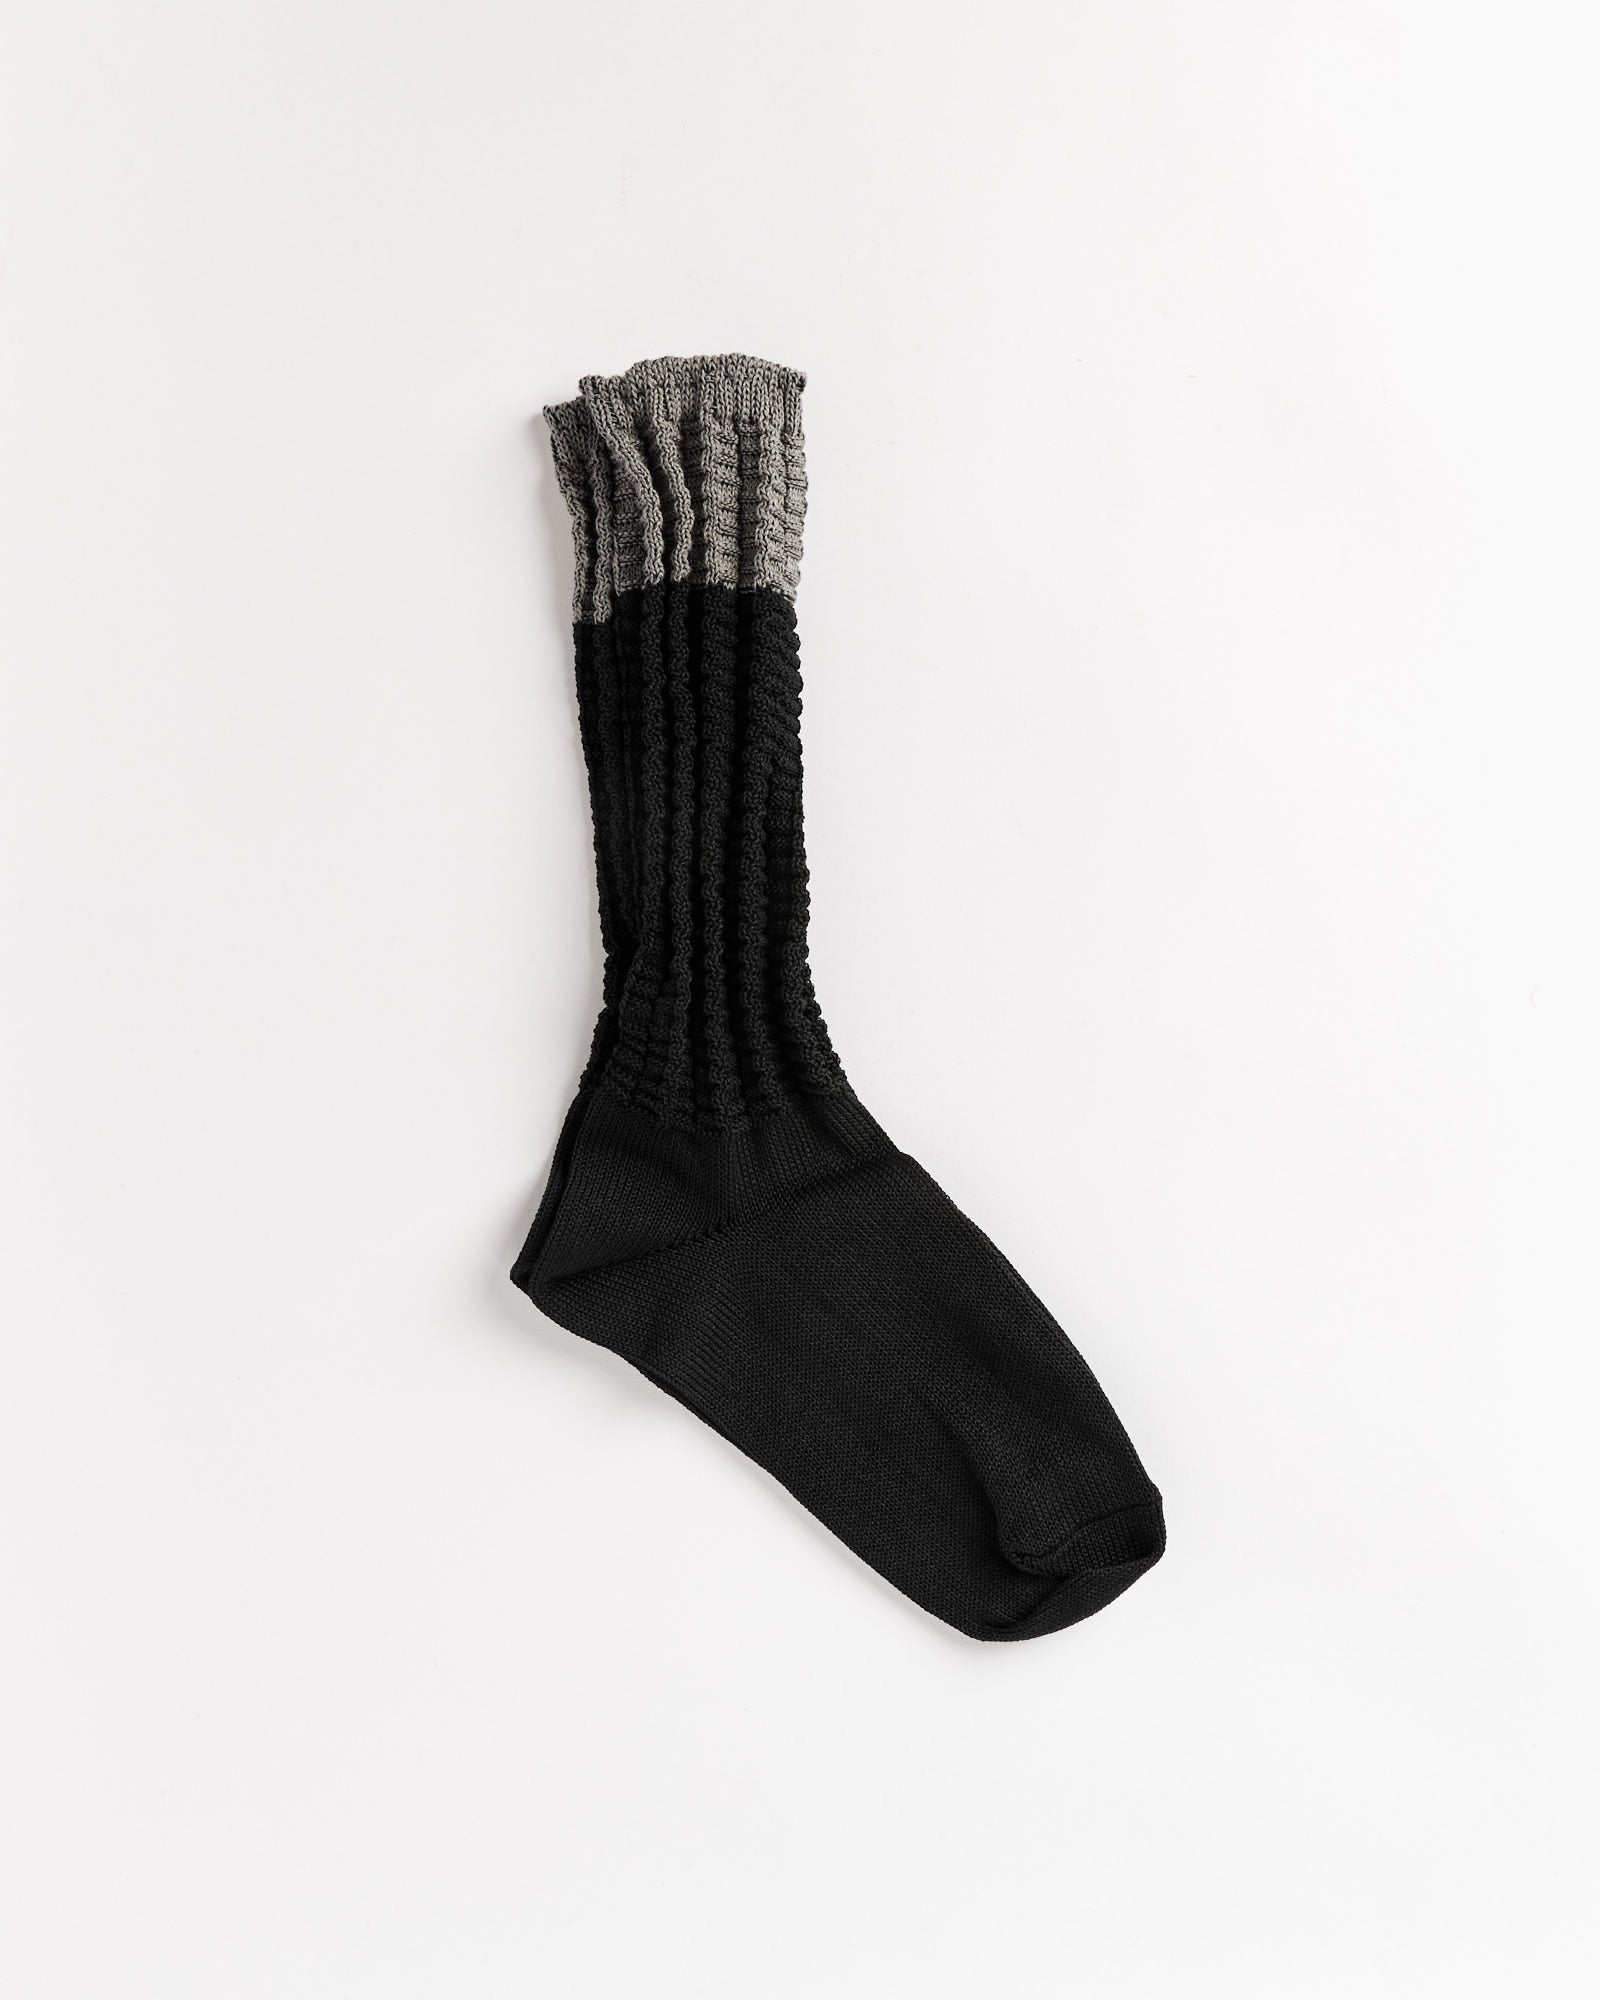 Churros Socks in Charcoal